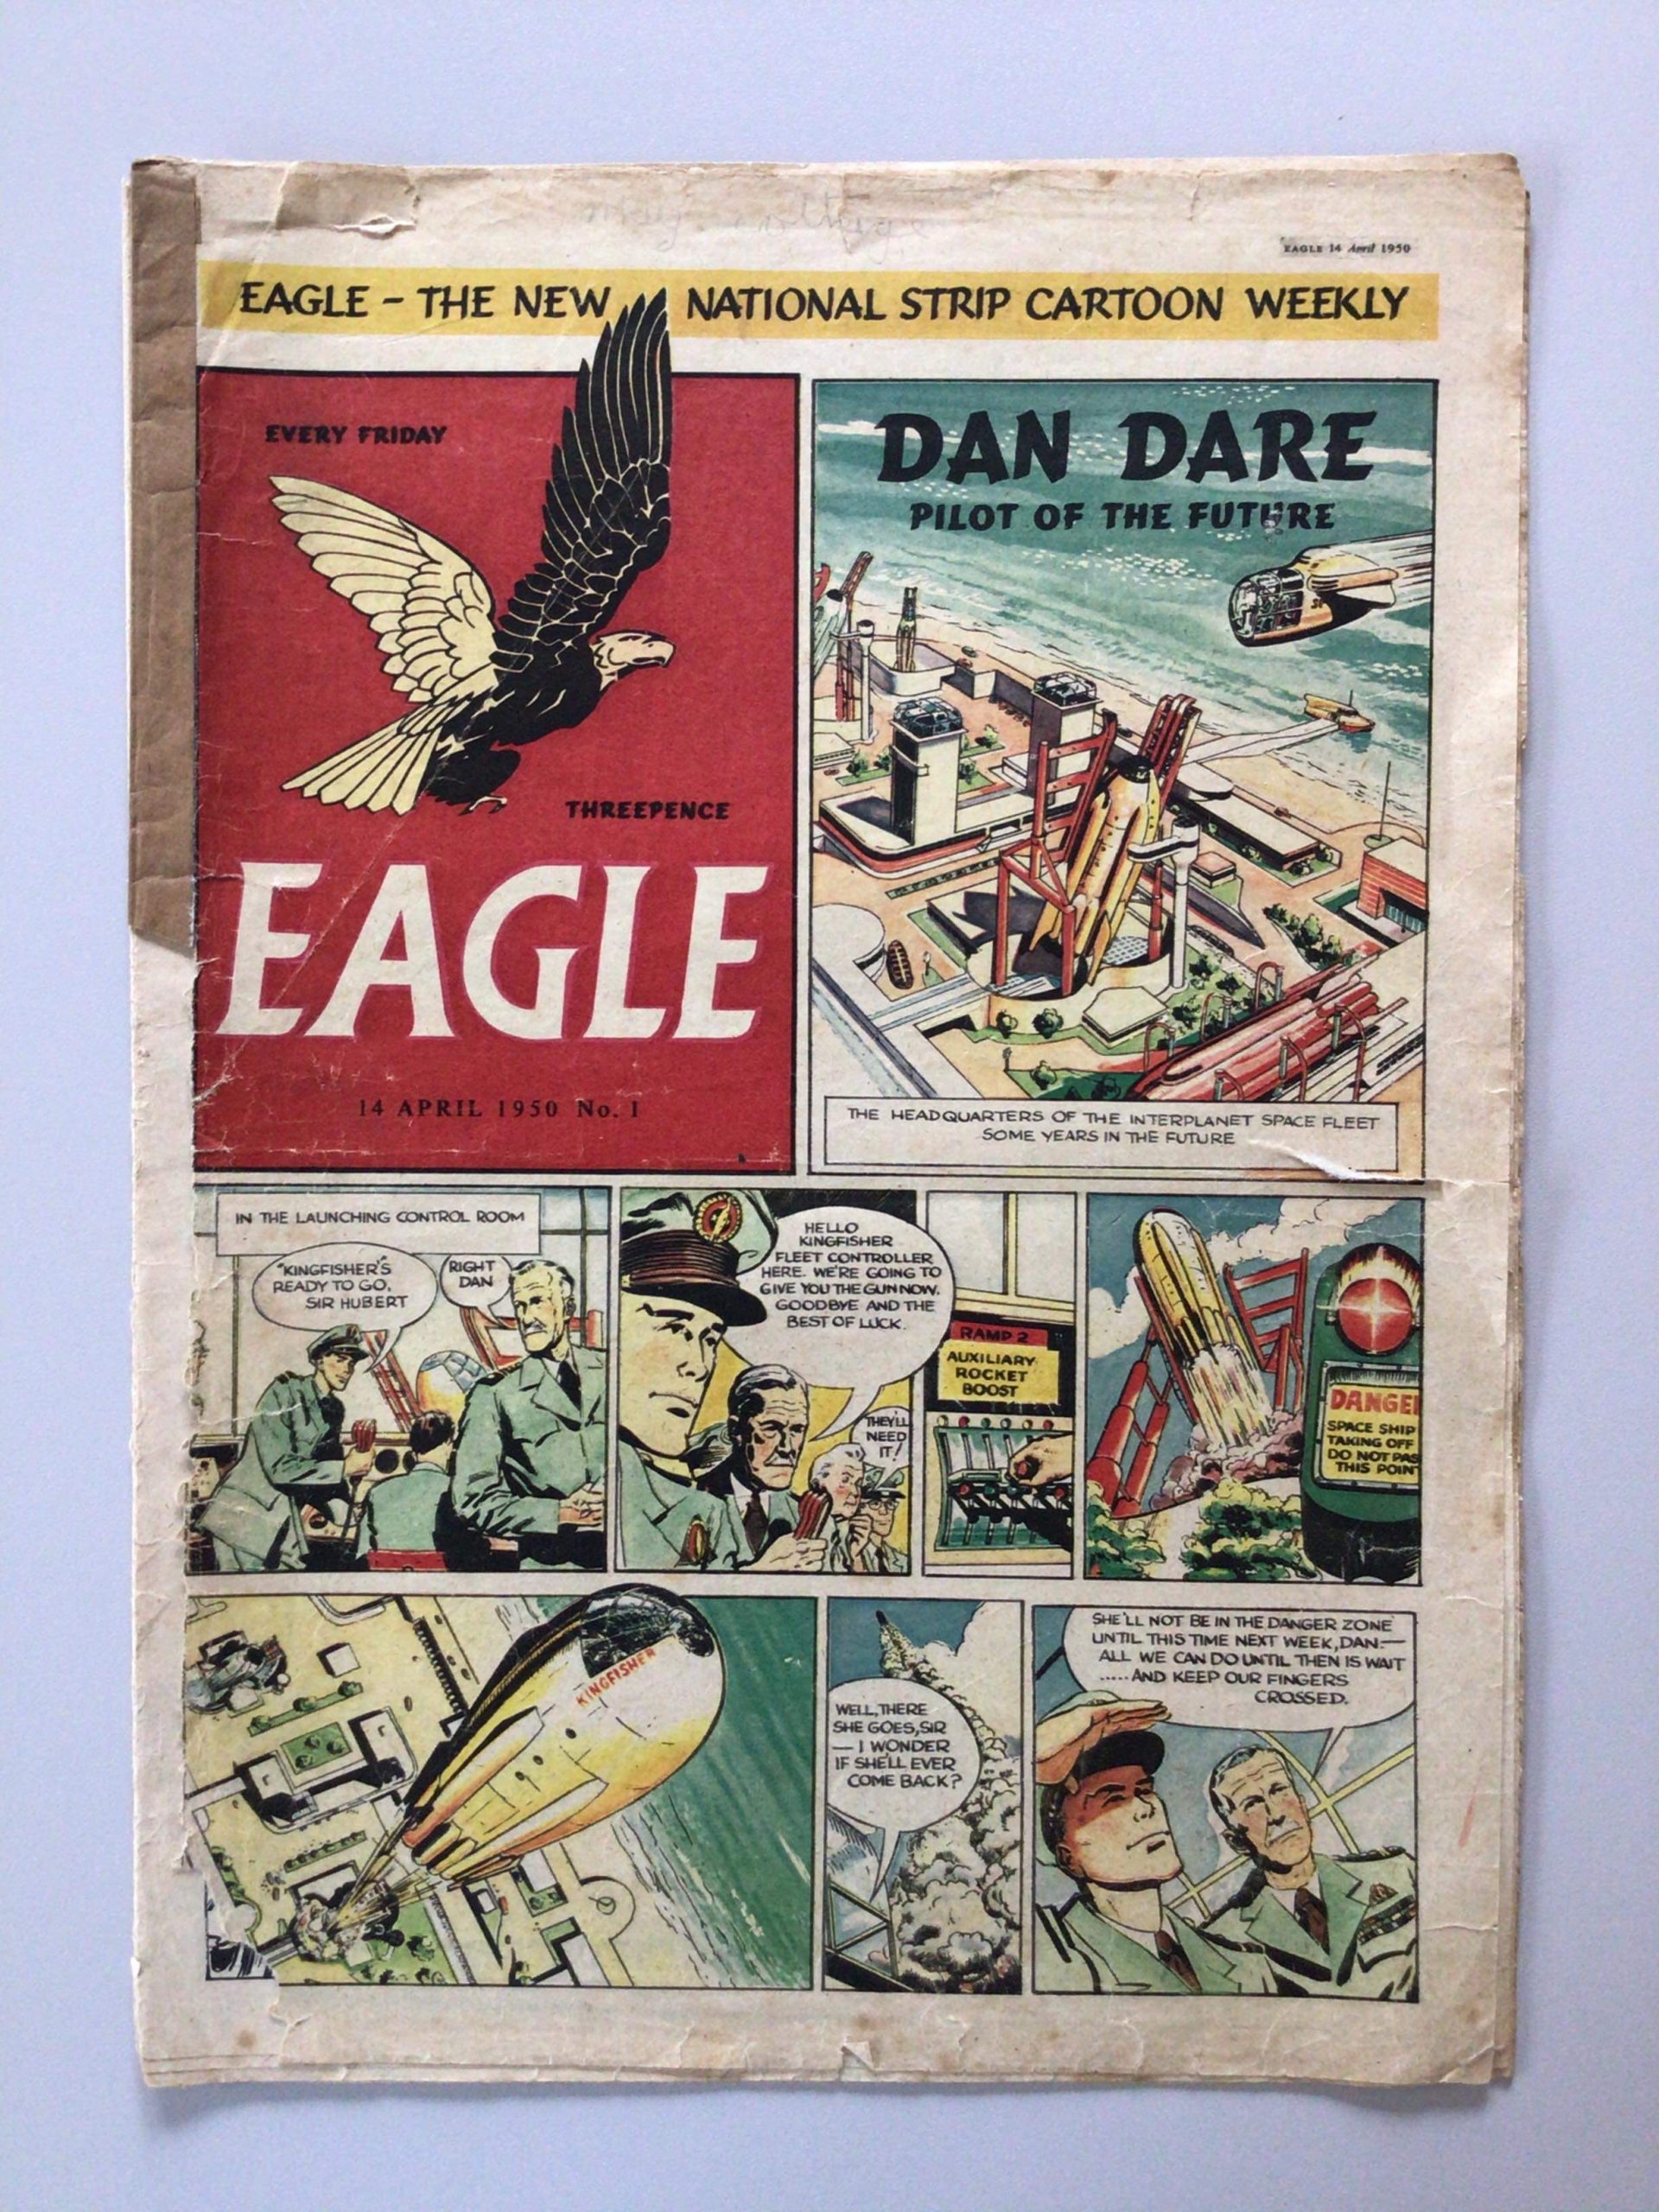 Eagle Comic Volume 1 No. 1 cover dated 14th April 1950